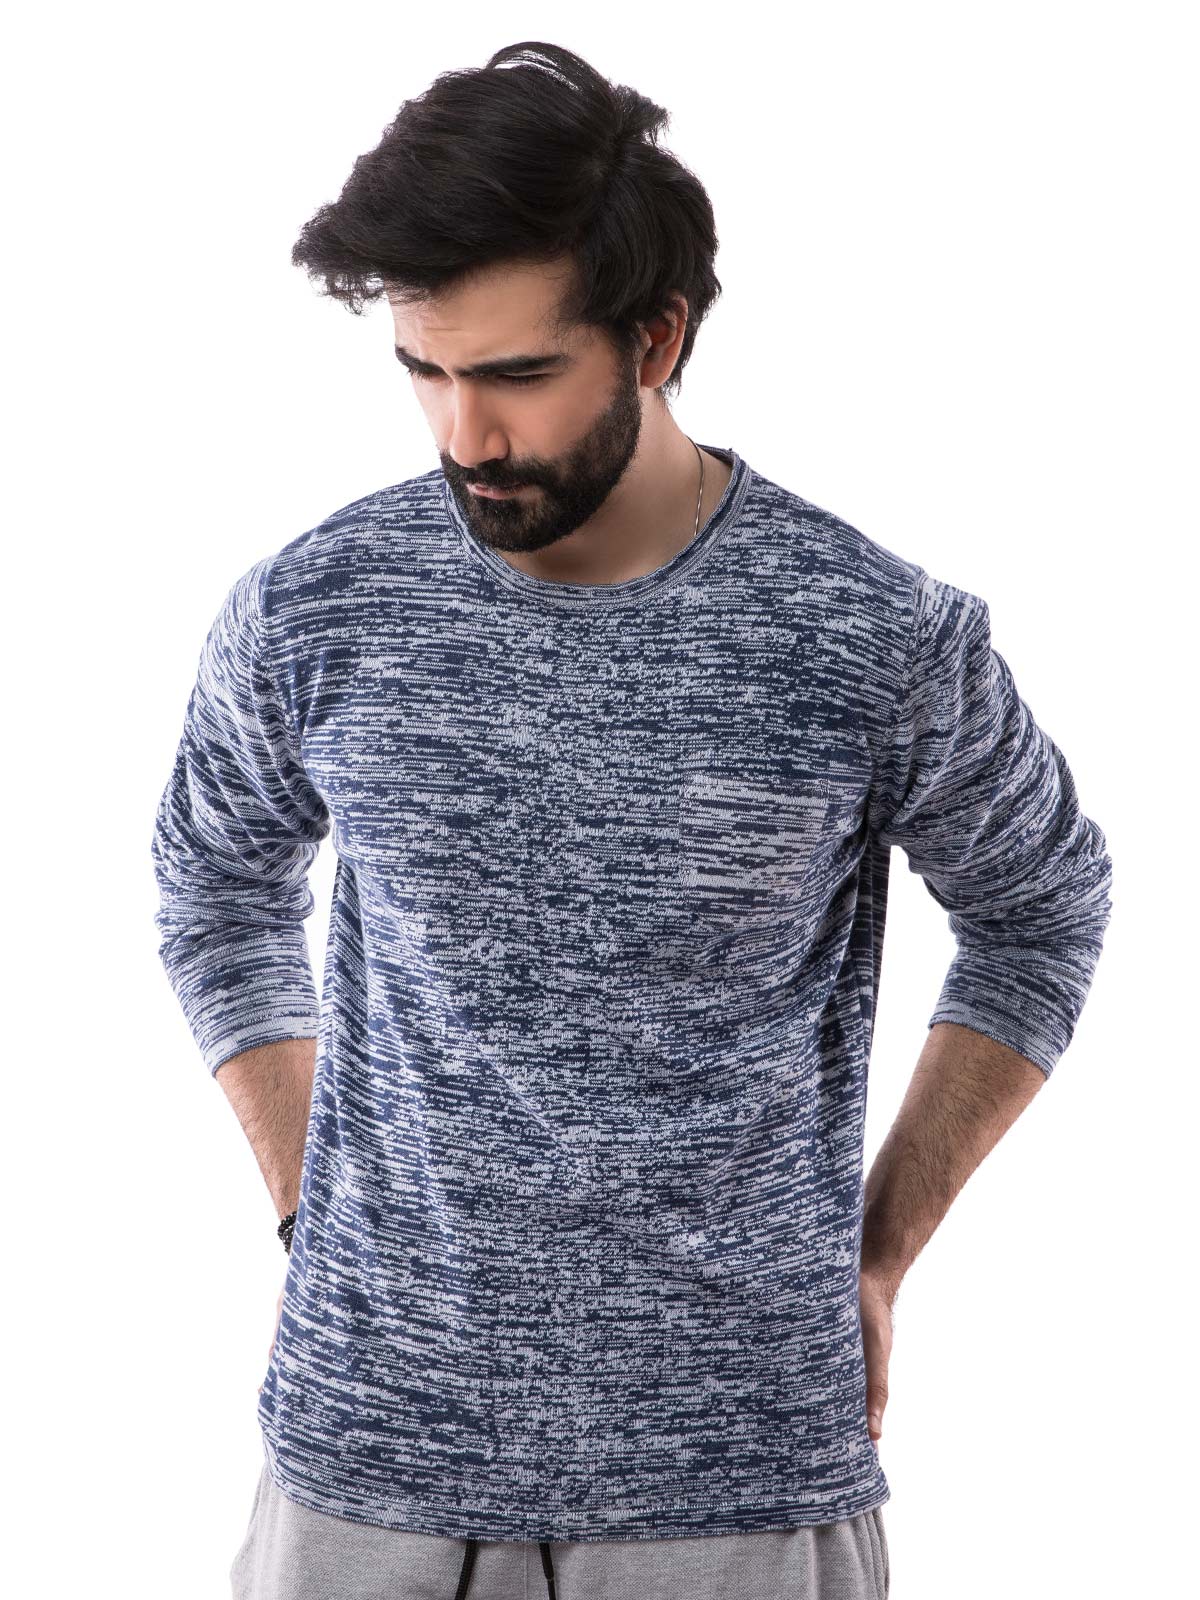 Men's Grey & Blue Sweater - FMTSWT19-001